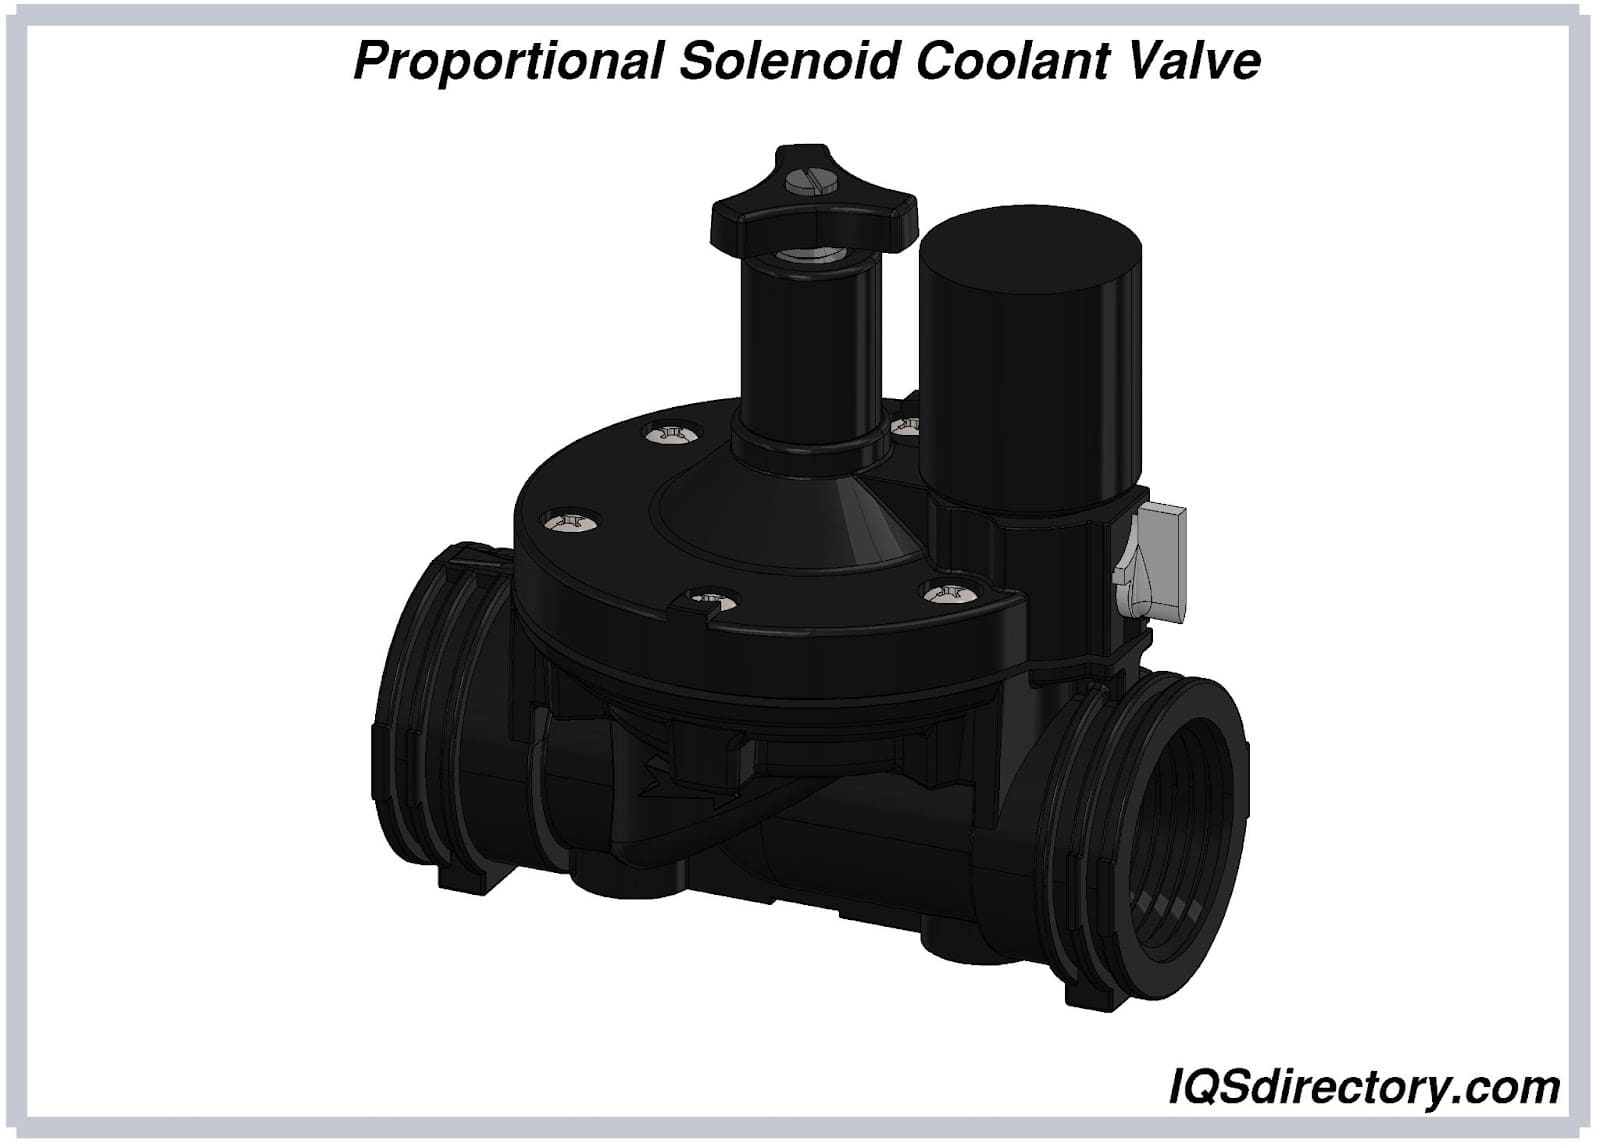 Proportional Solenoid Coolant Valve